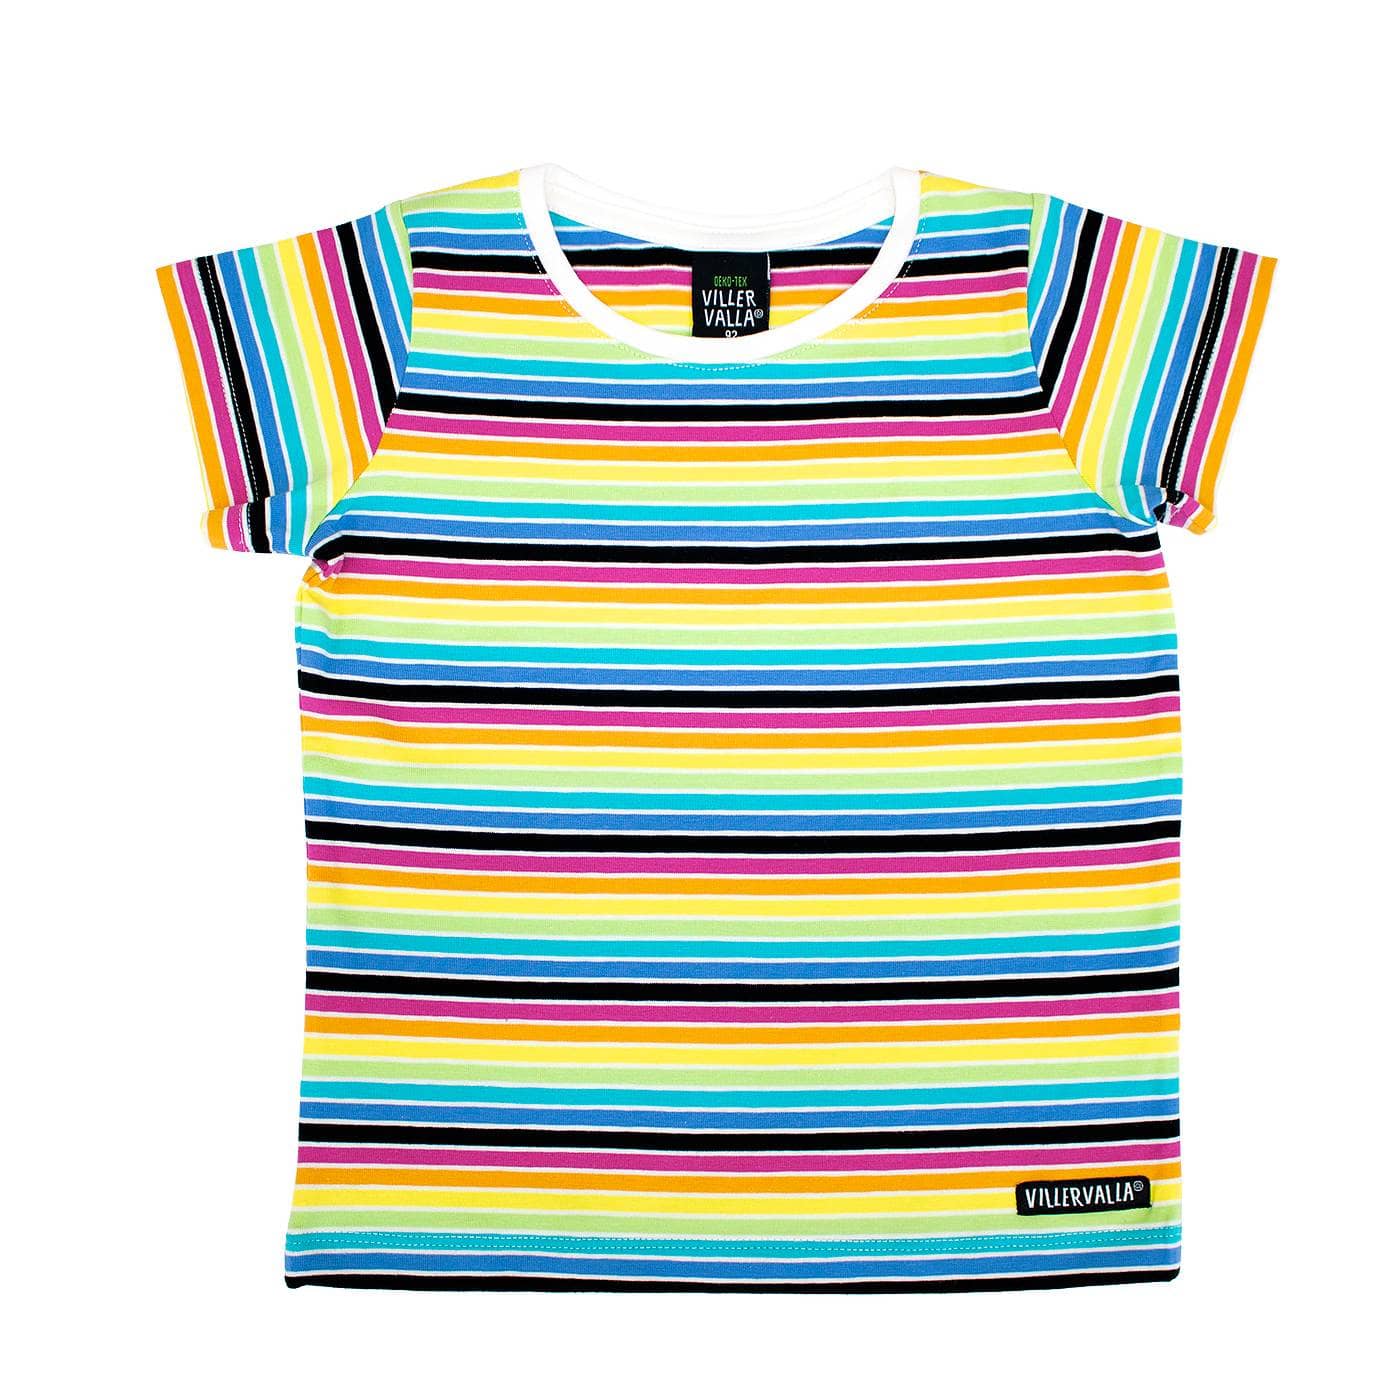 Villervalla rainbow stripe organic cotton t-shirt